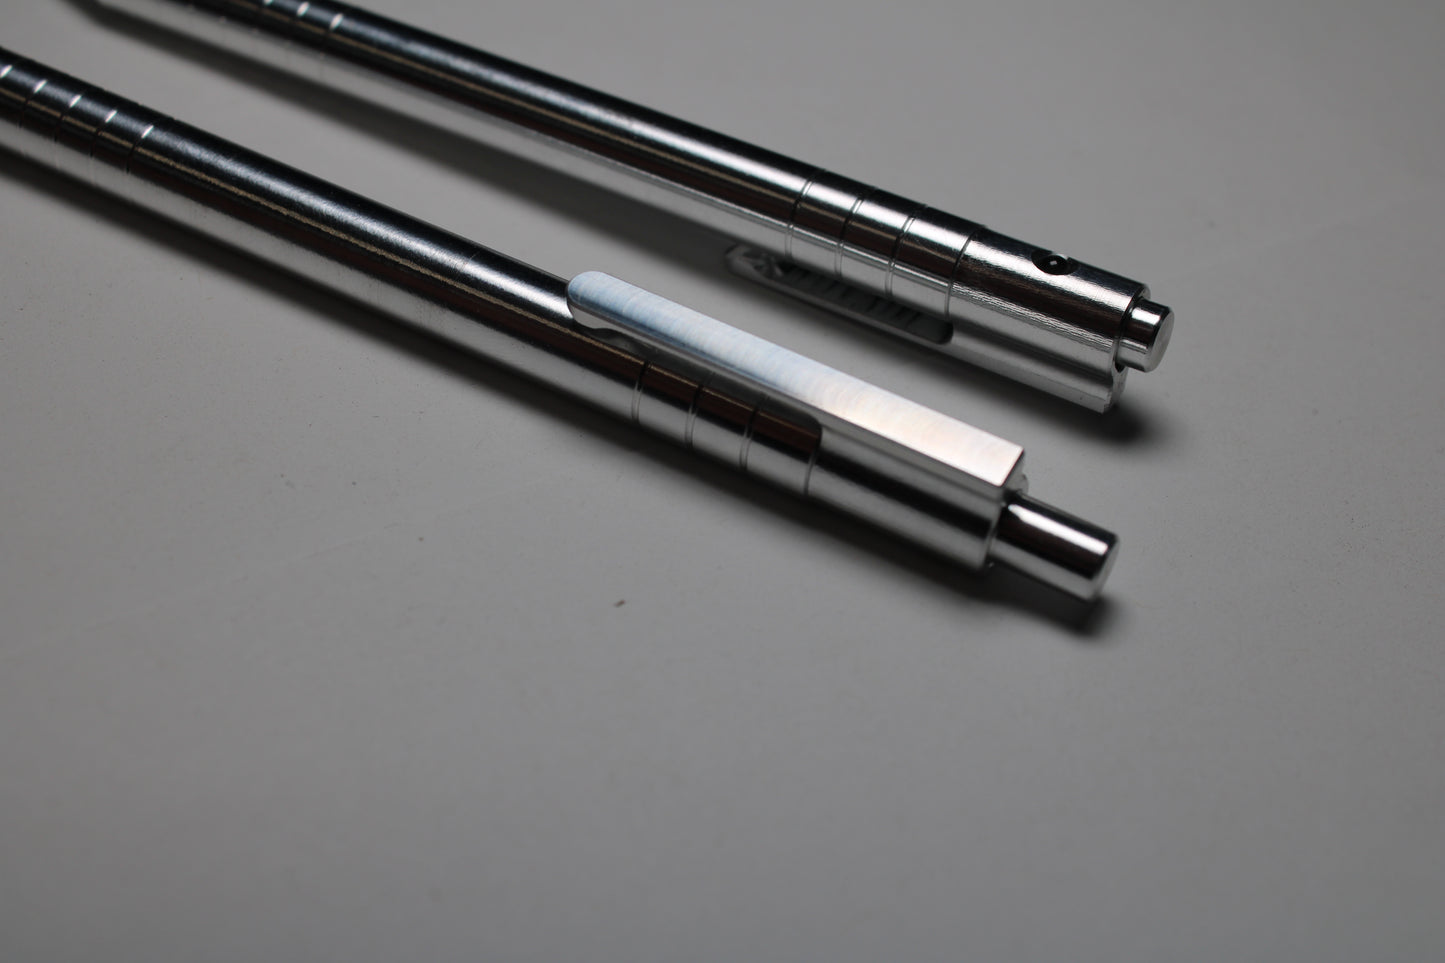 36 Click Pen - 6061 Aluminum - Conical Nose - Borosilicate Ball - Grip Lines - Pilot G2